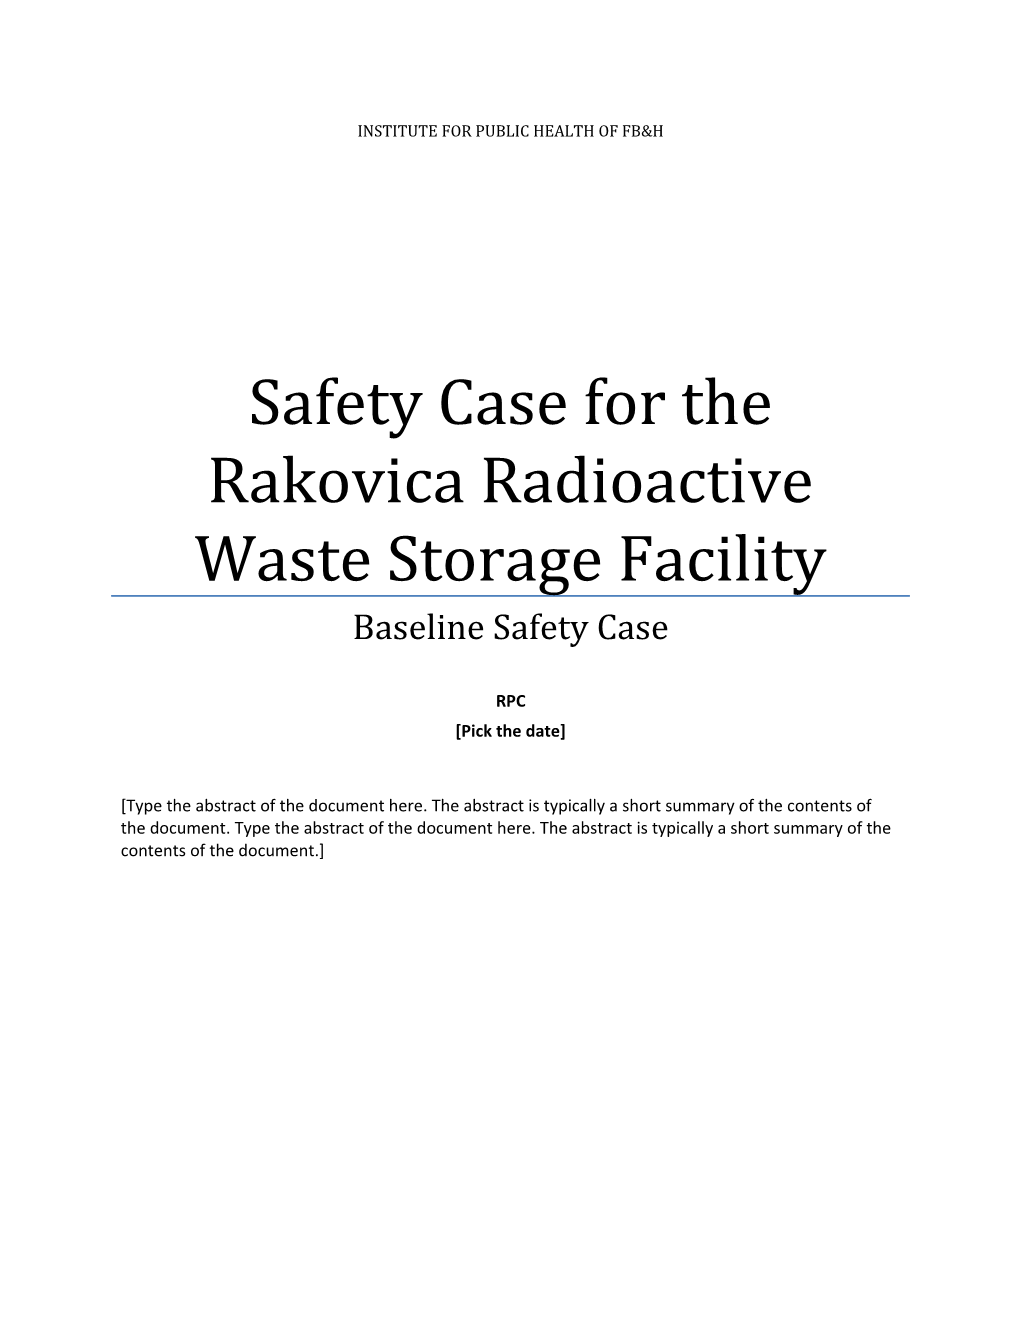 Safety Case for the Rakovica Radioactive Waste Storage Facility